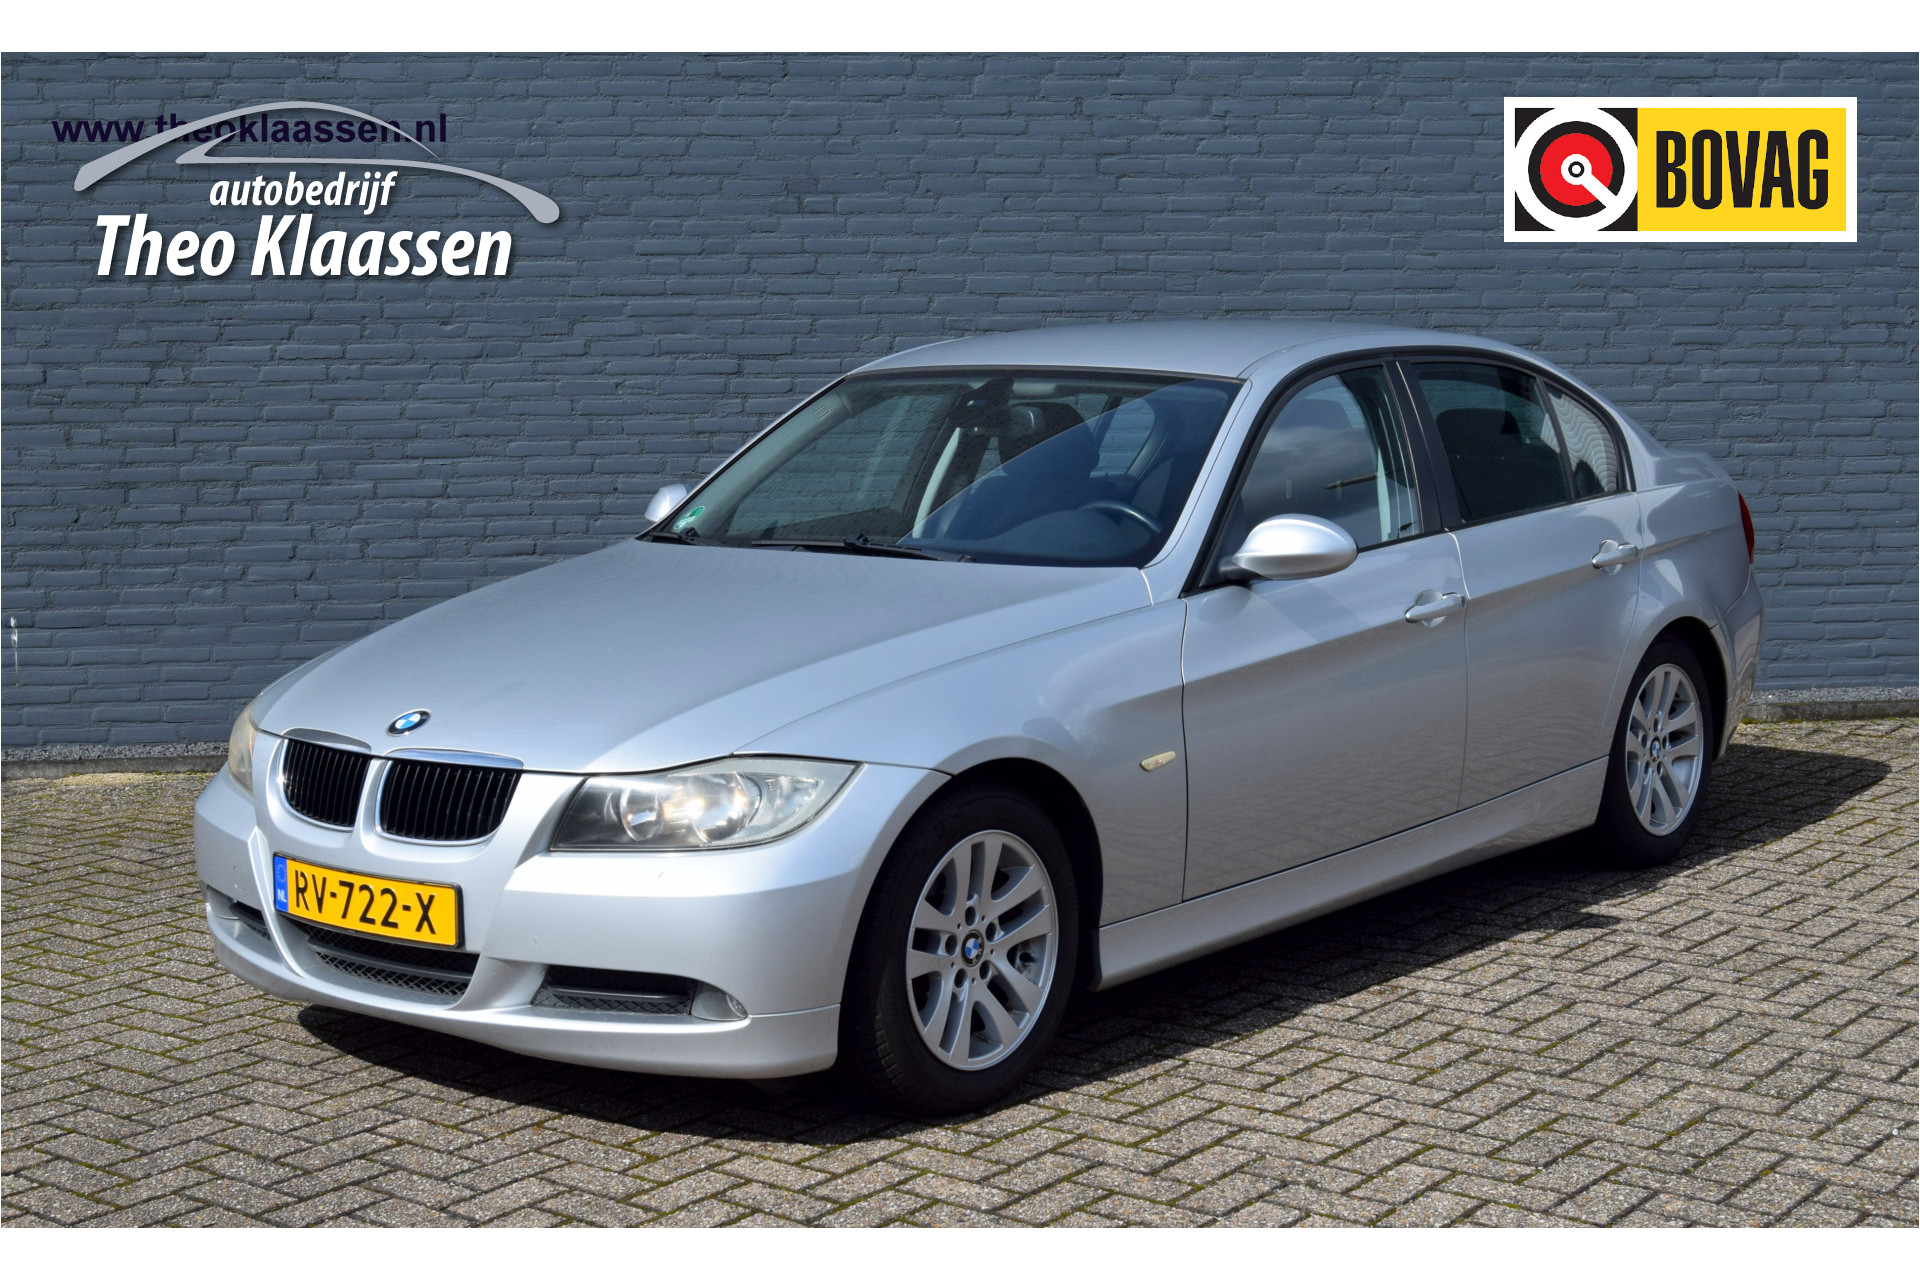 BMW 3 Serie 318i Climate & Cruise control 100% onderhouden bij viaBOVAG.nl